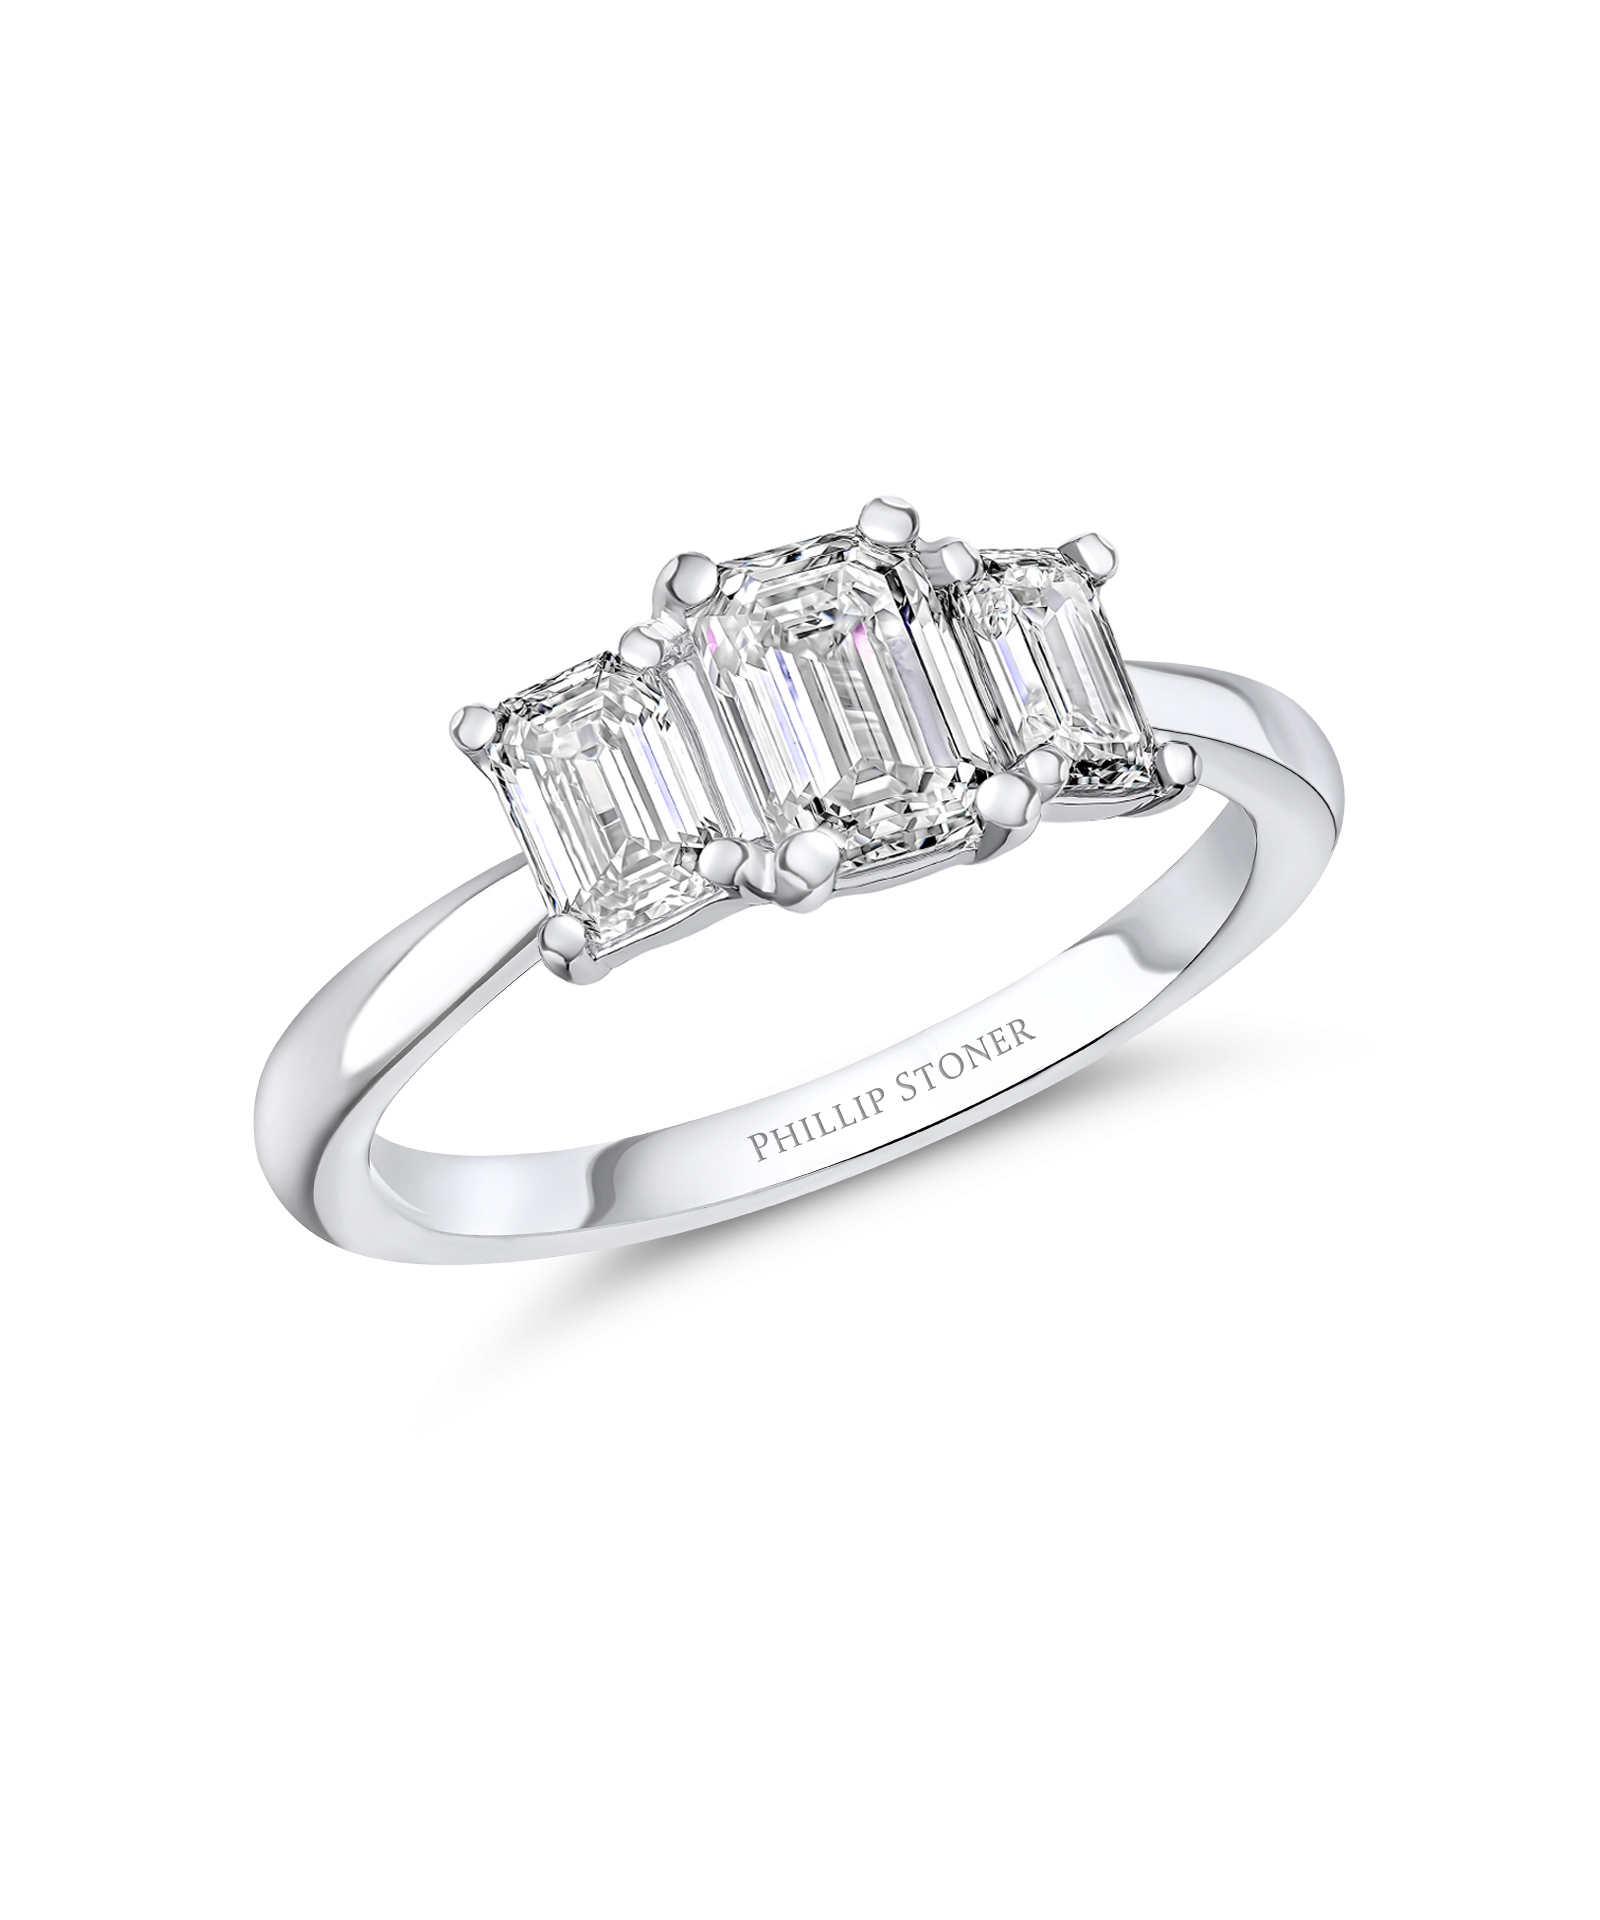 1ct Emerald Cut Diamond Trilogy Engagement Ring - Phillip Stoner The Jeweller